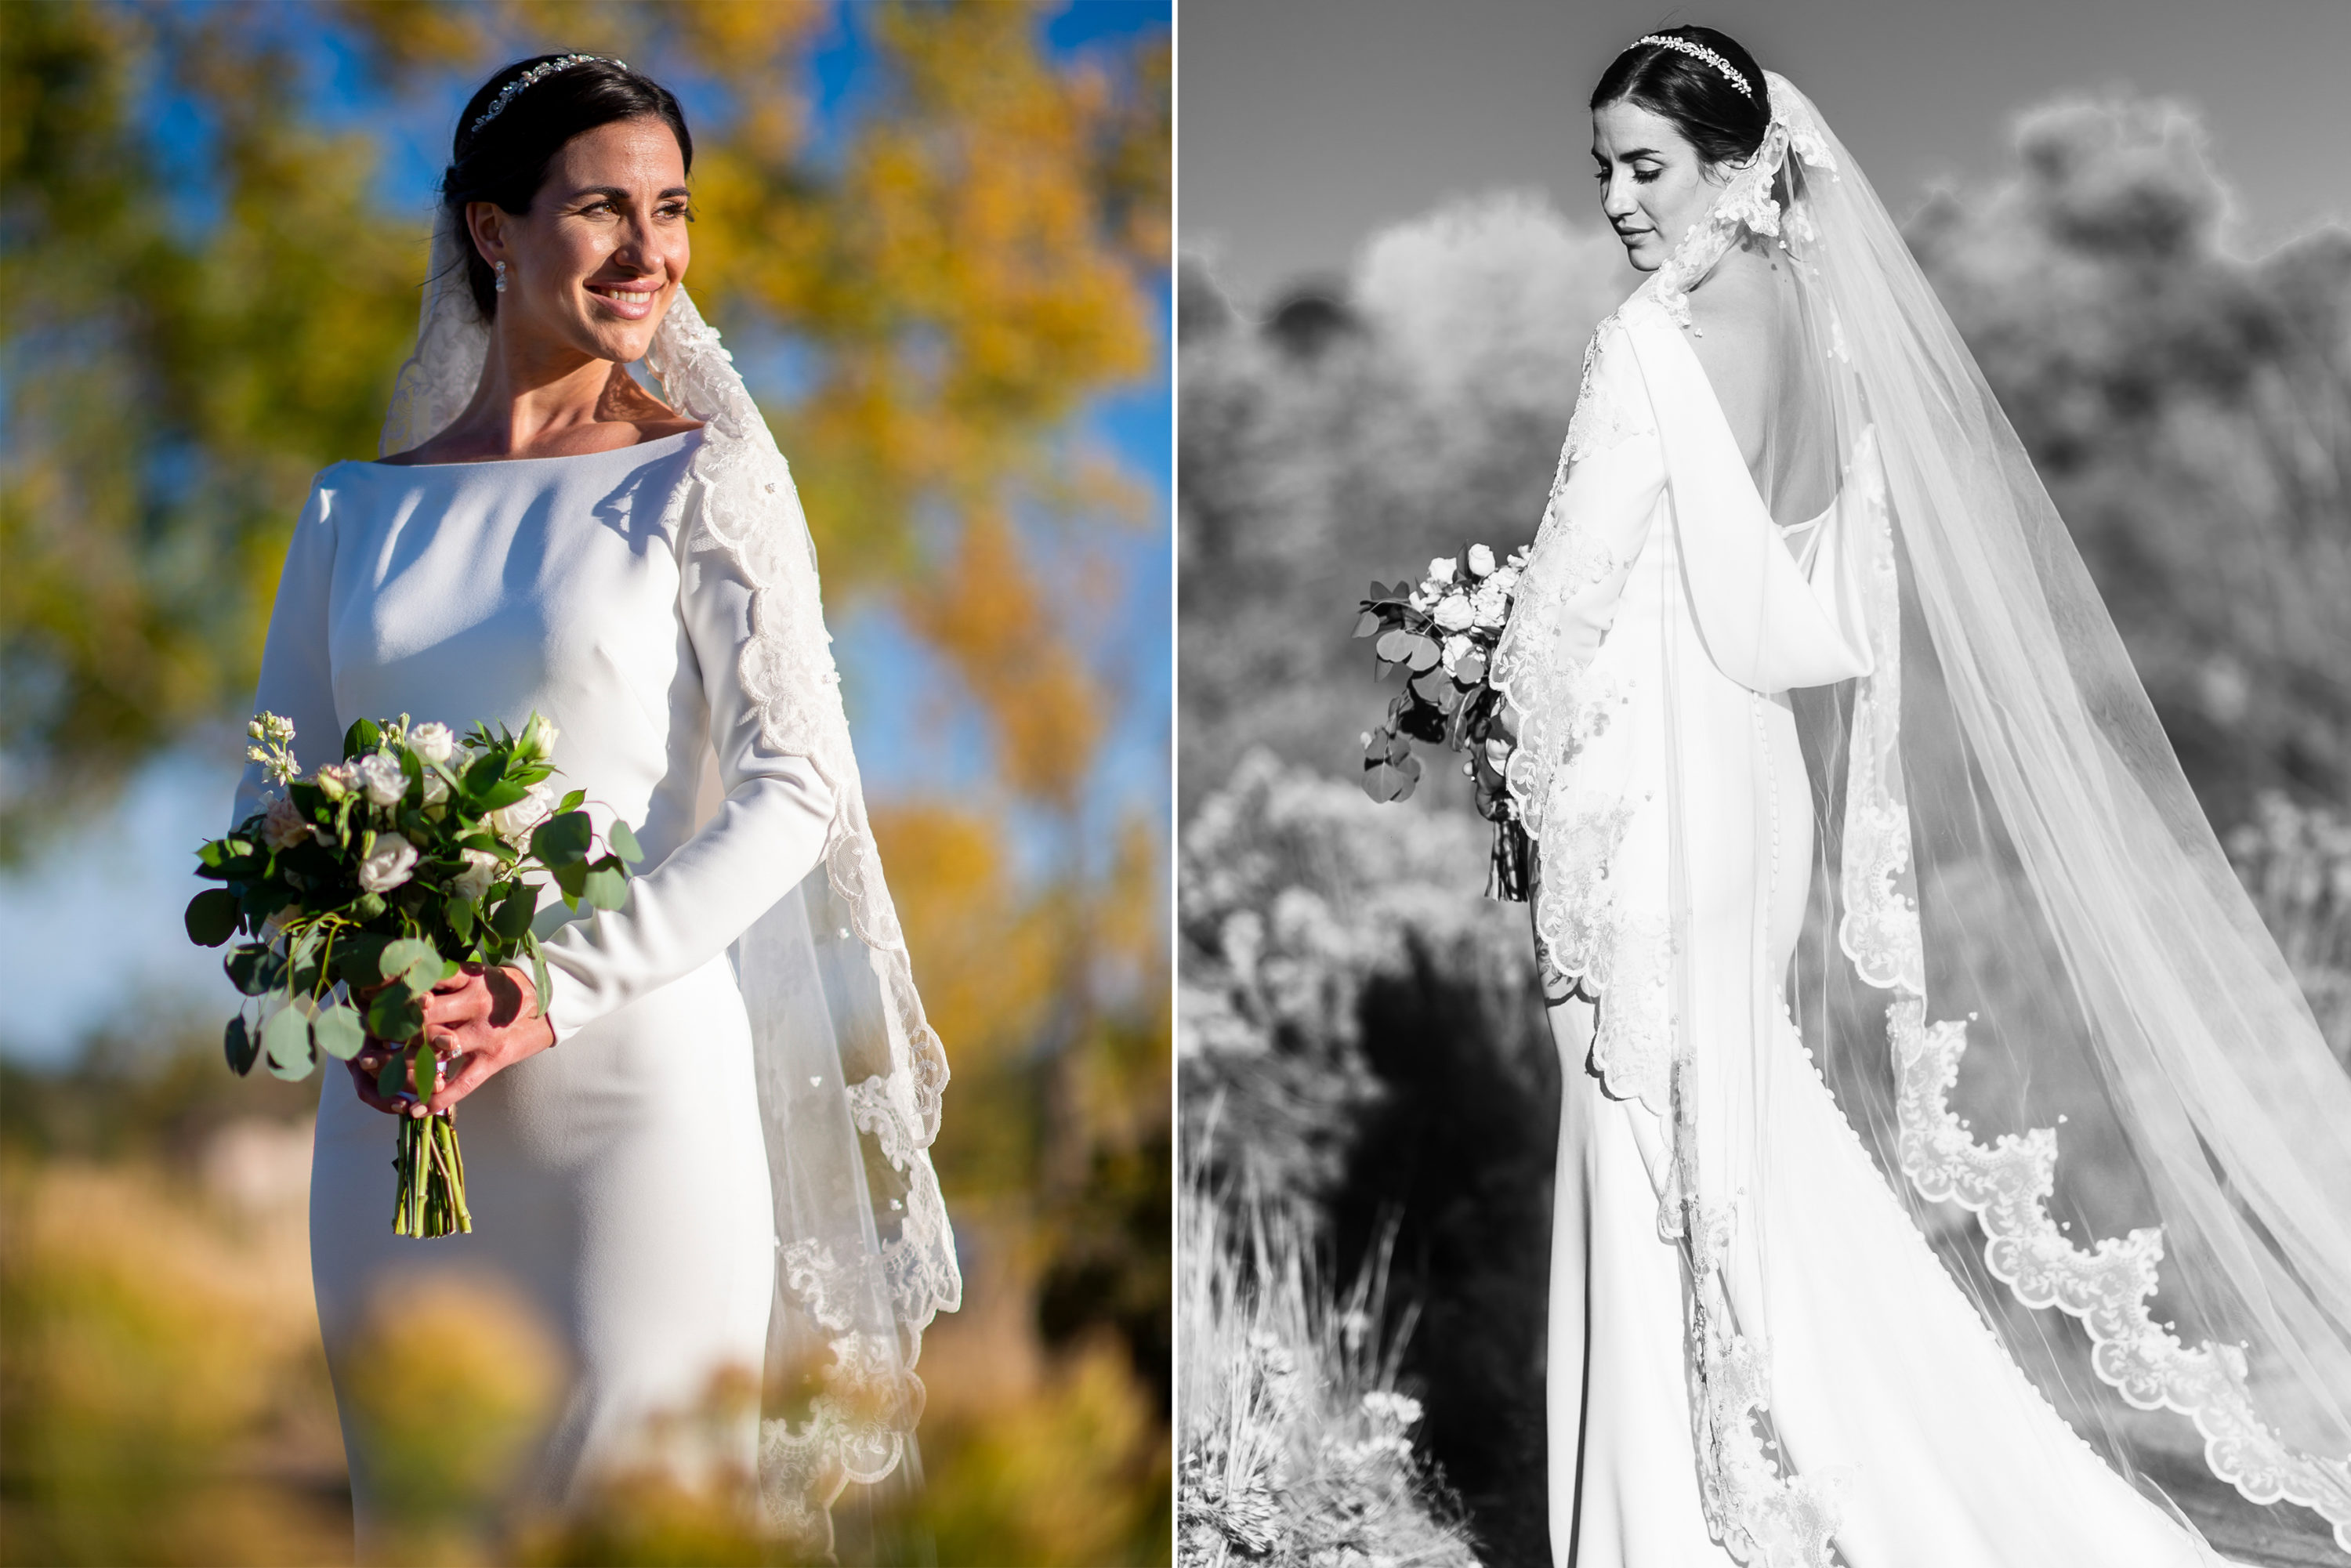 Bride poses during wedding photo portraits at Belmar Park in Lakewood, Colorado.